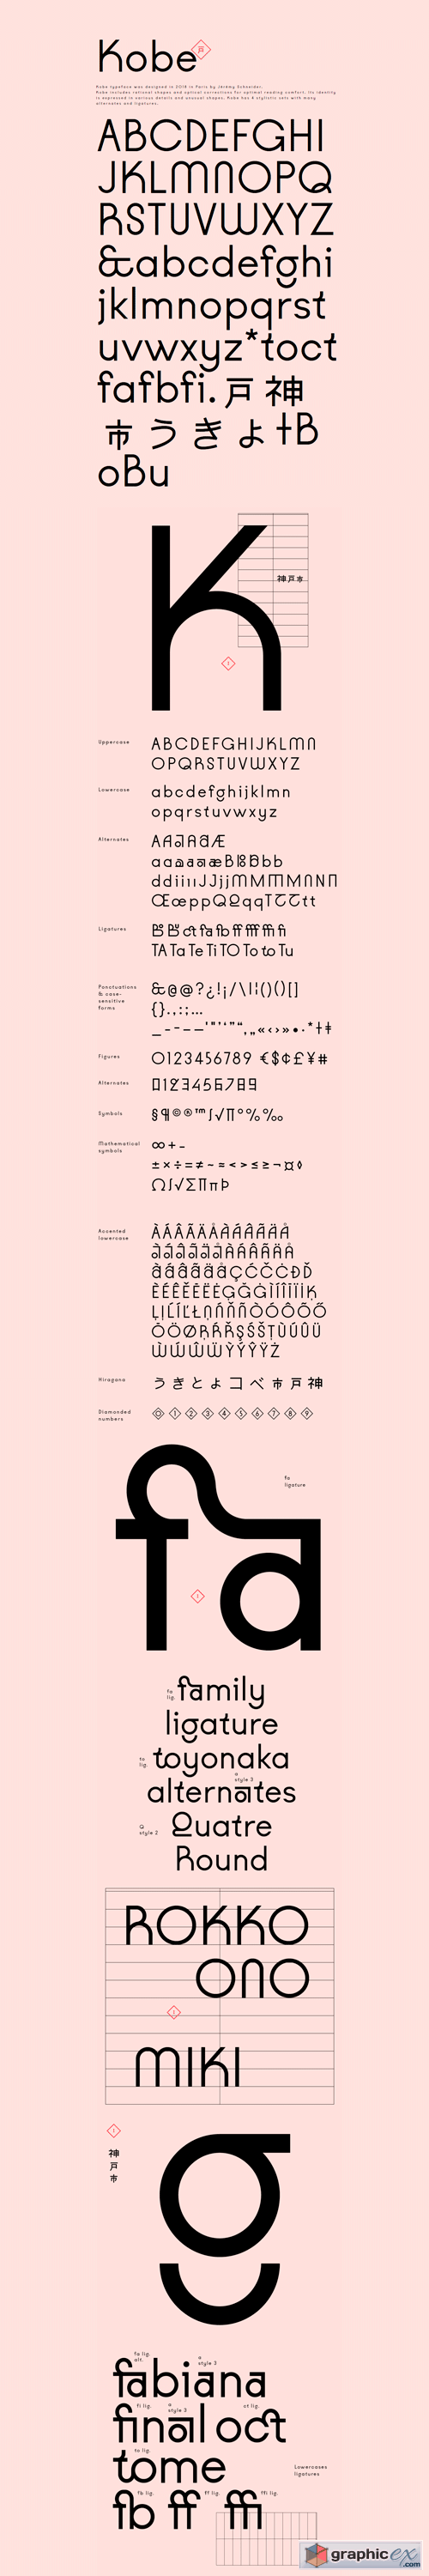 VJ Kobe Typeface